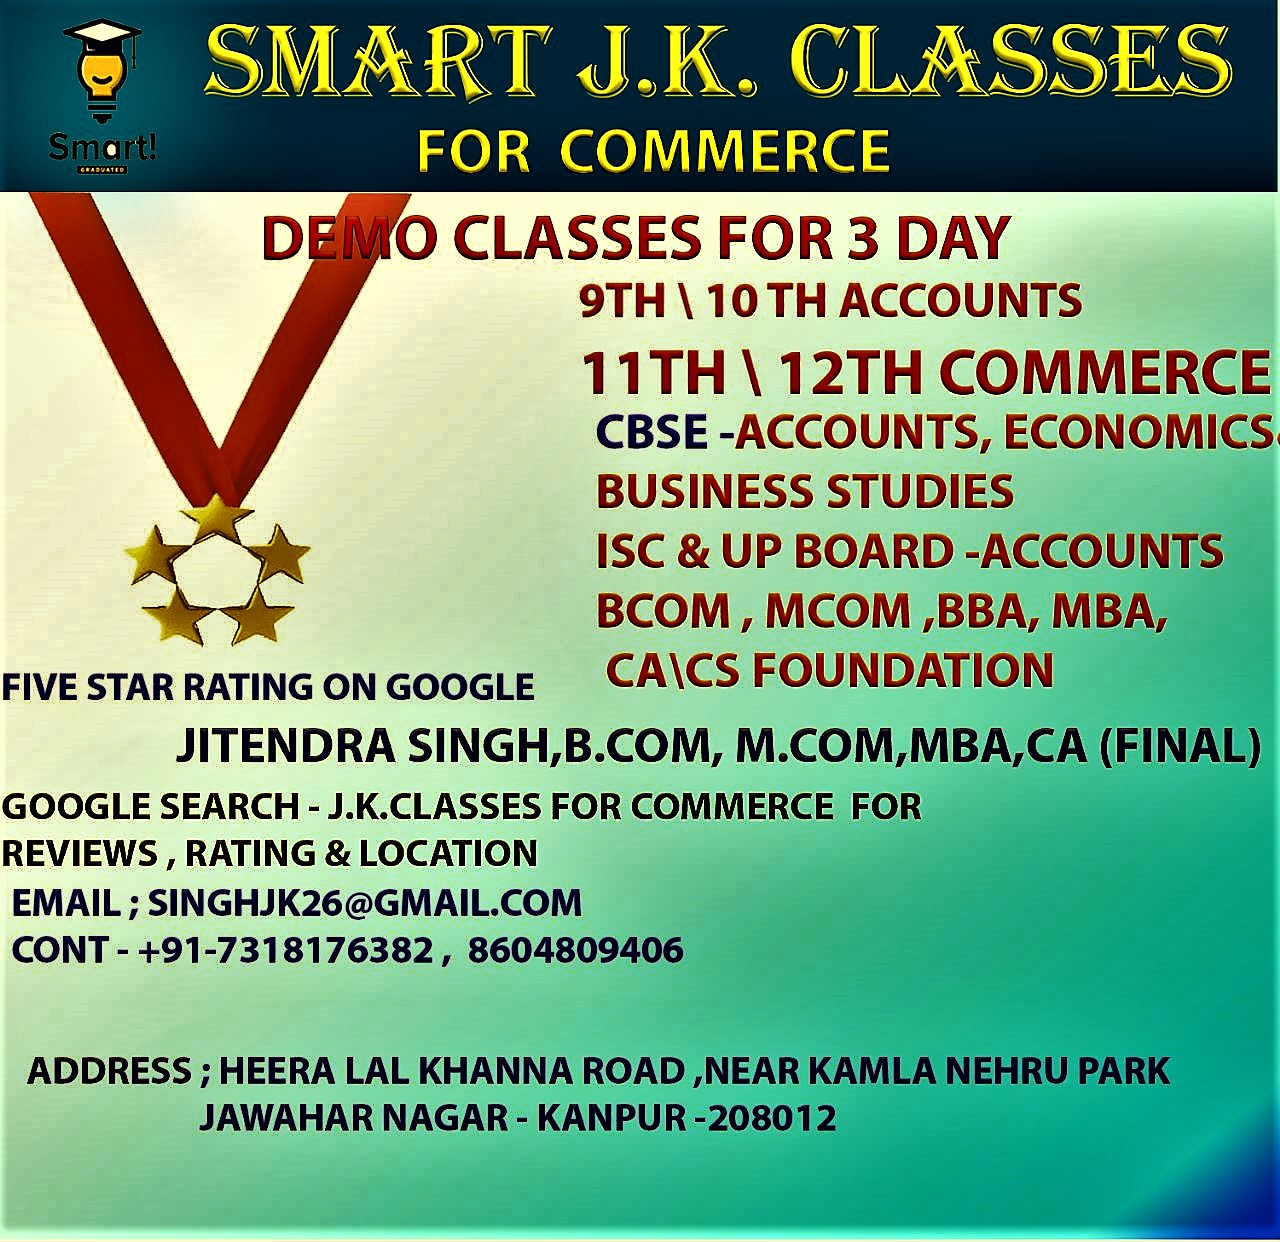 24089SMART JK CLASSES FOR COMMERCE
Class 11th & 12th B.Com M.Com BBA MBA CA/CMA Inter